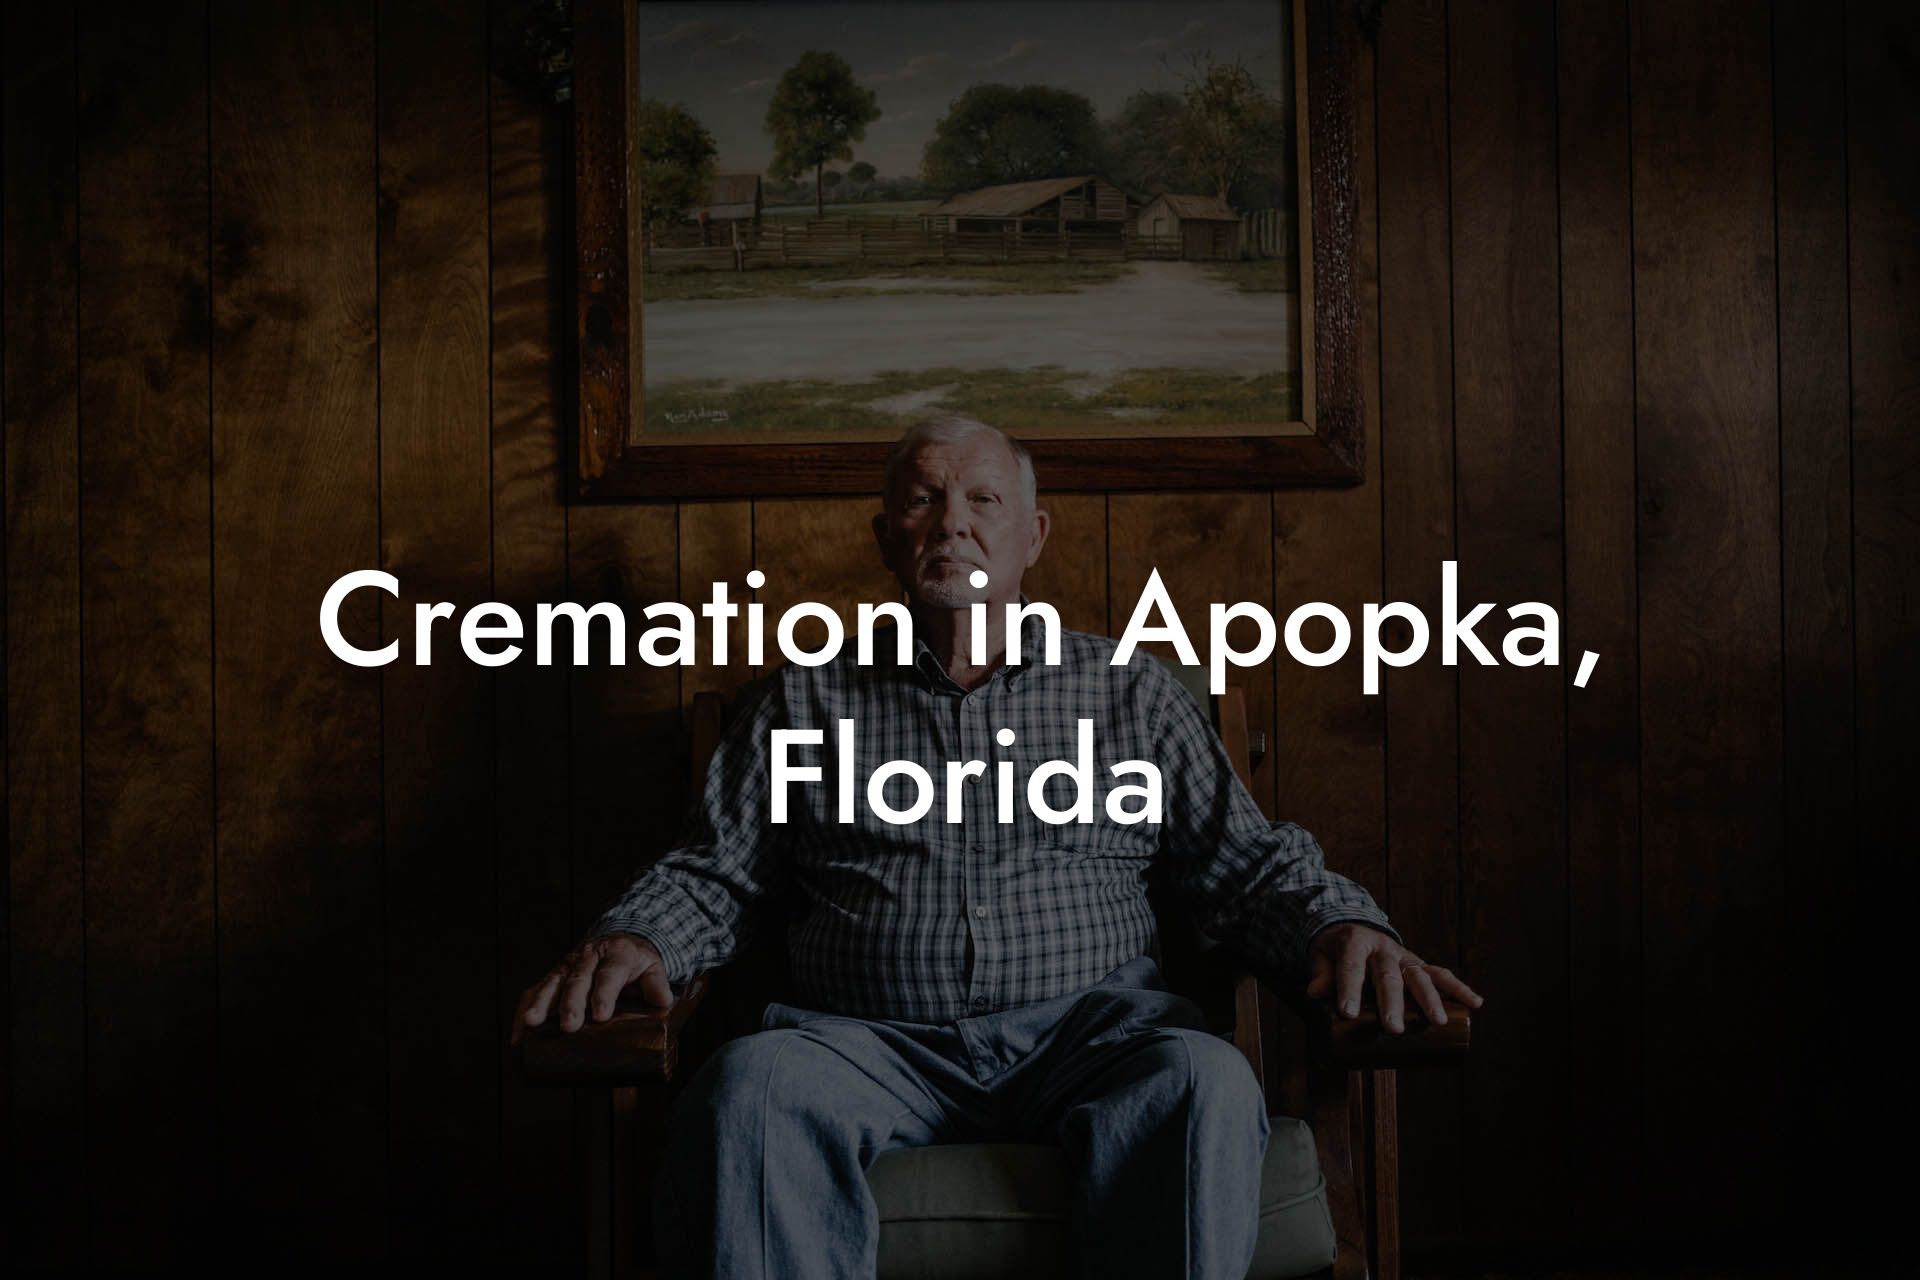 Cremation in Apopka, Florida